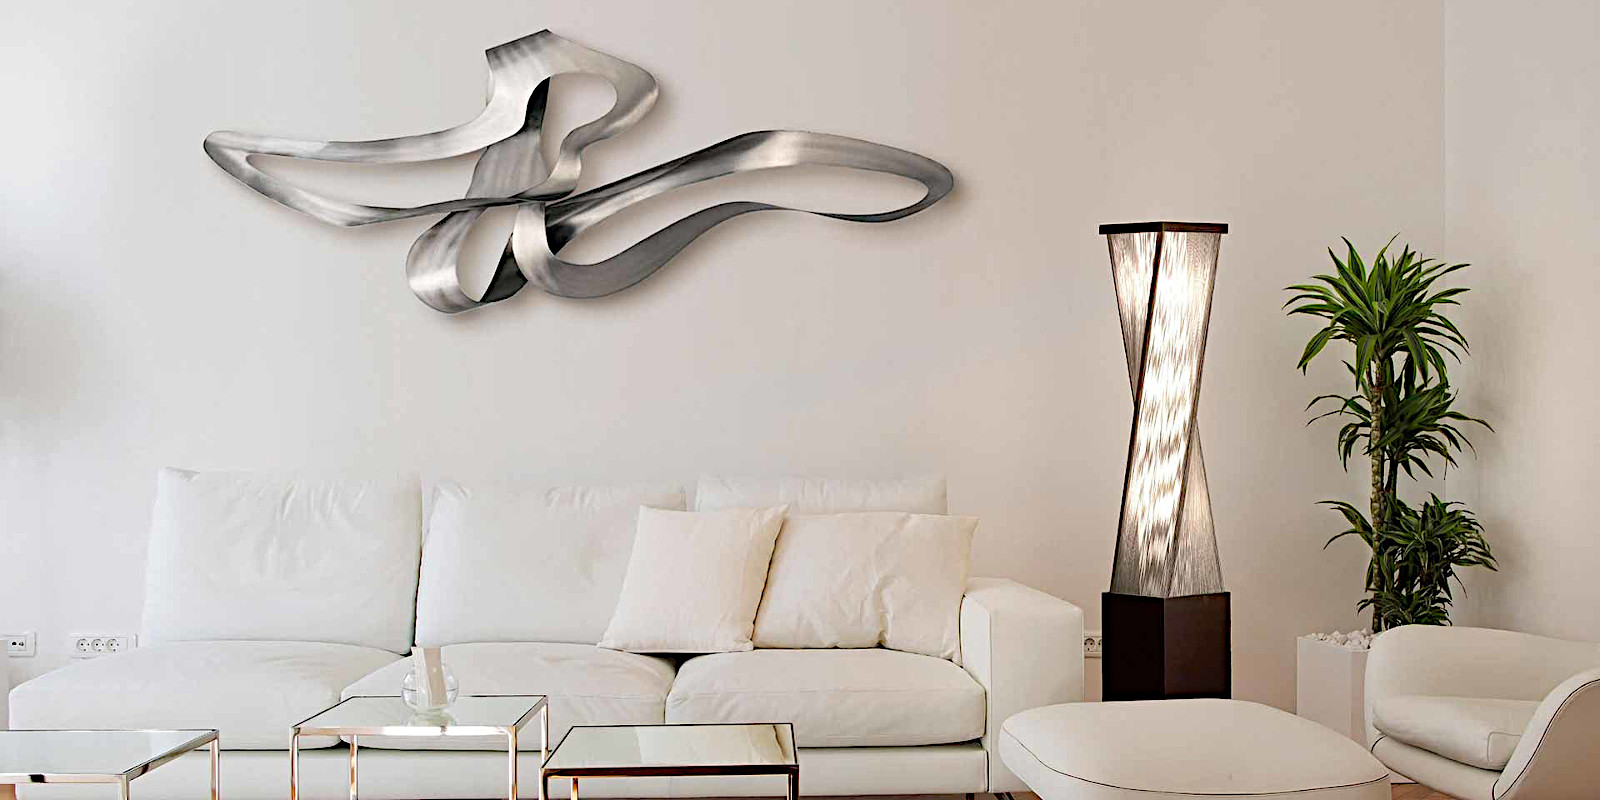 Distinct modern lighting and decor